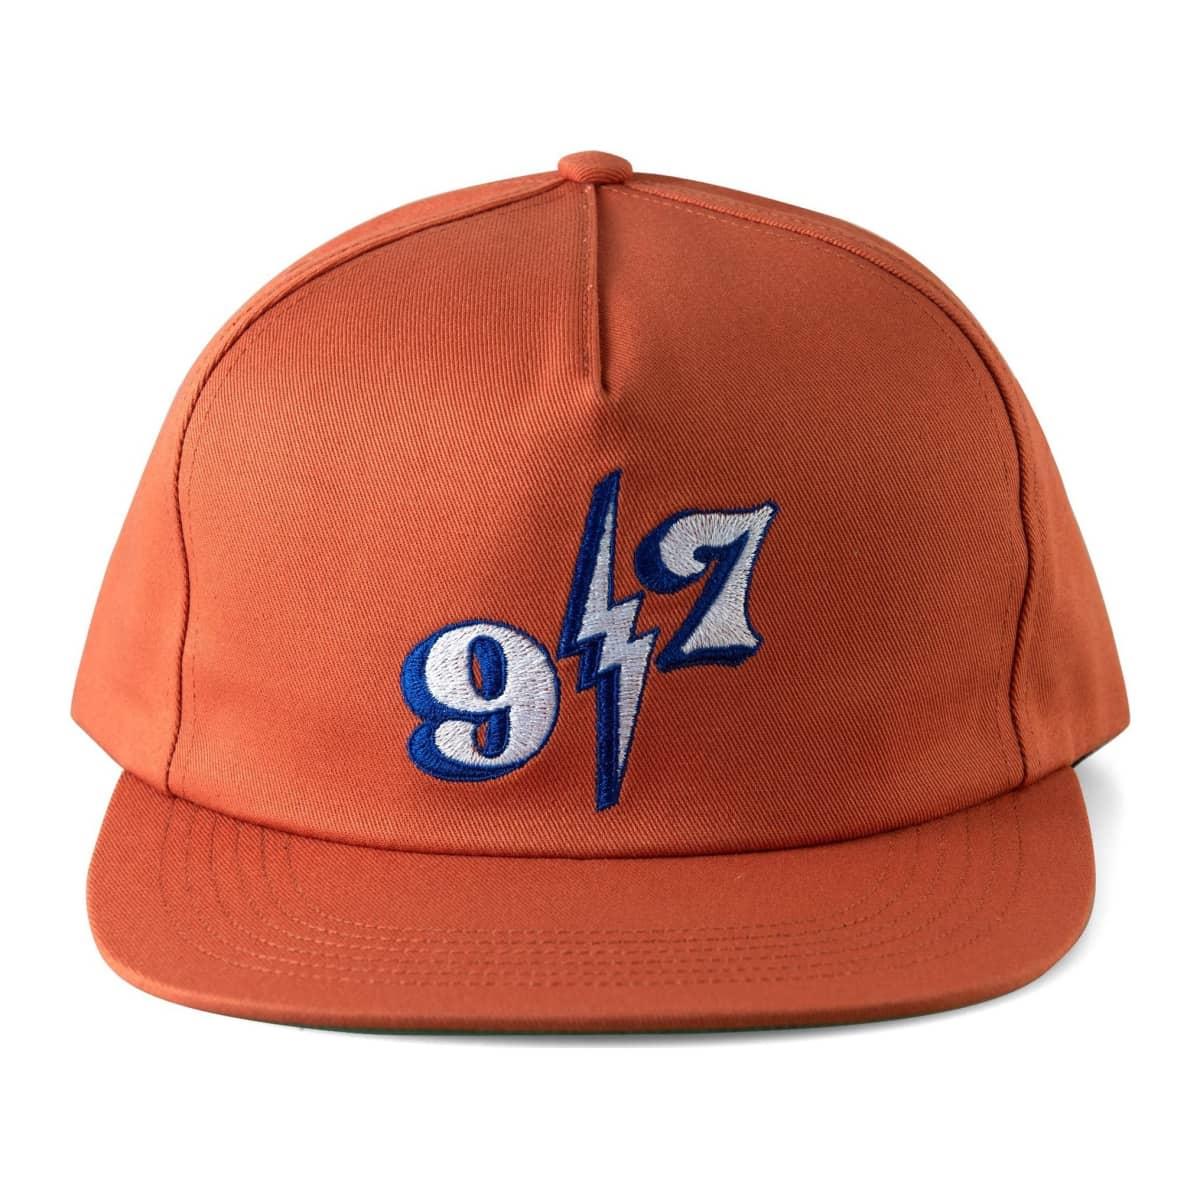 Call Me 917 – Bolt Orange Snapback orange